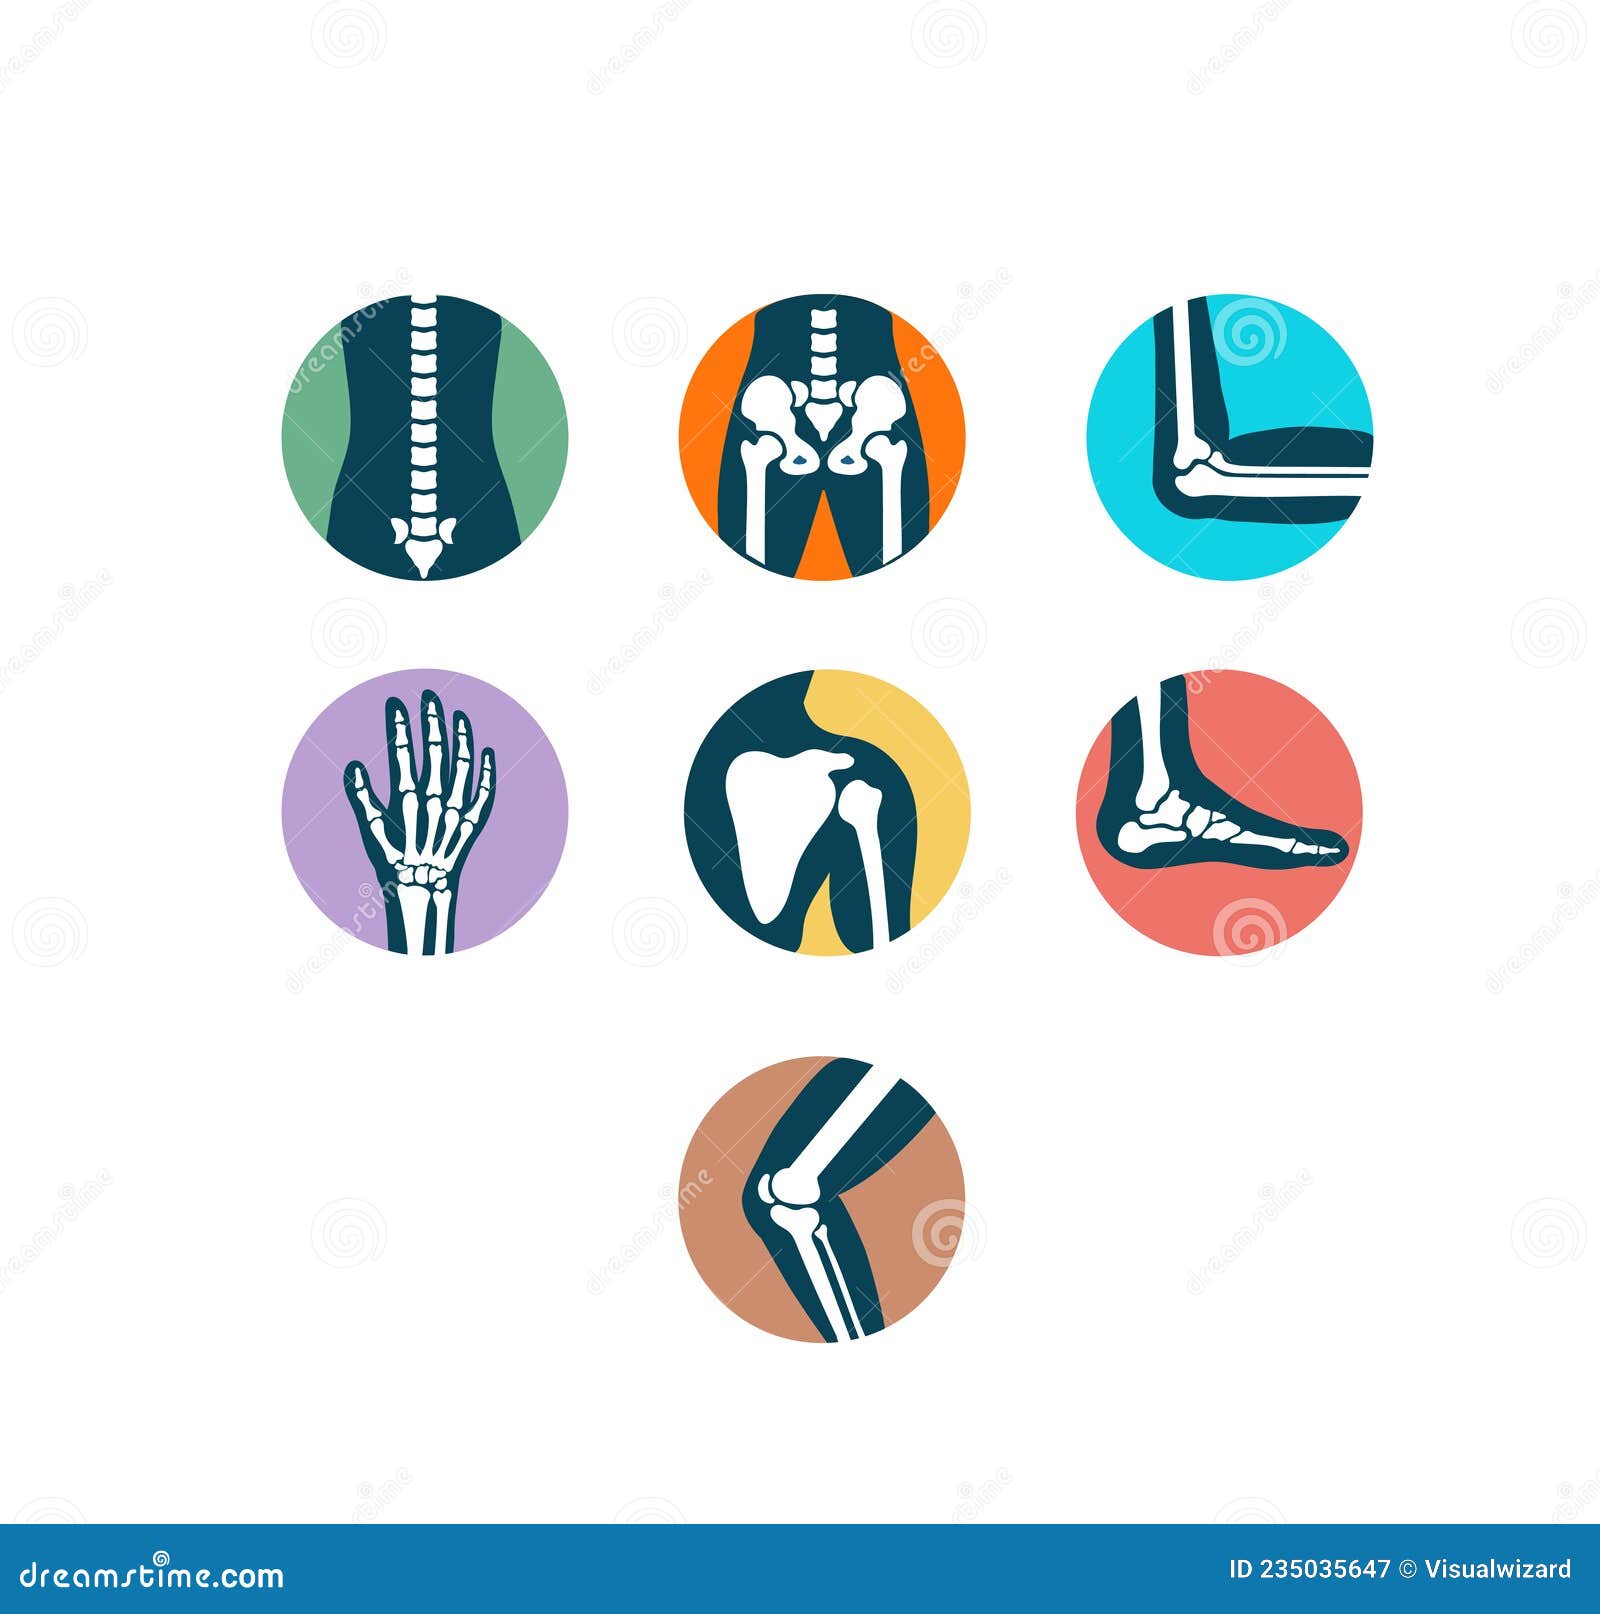 orthopedic medical human joints and bones icon set